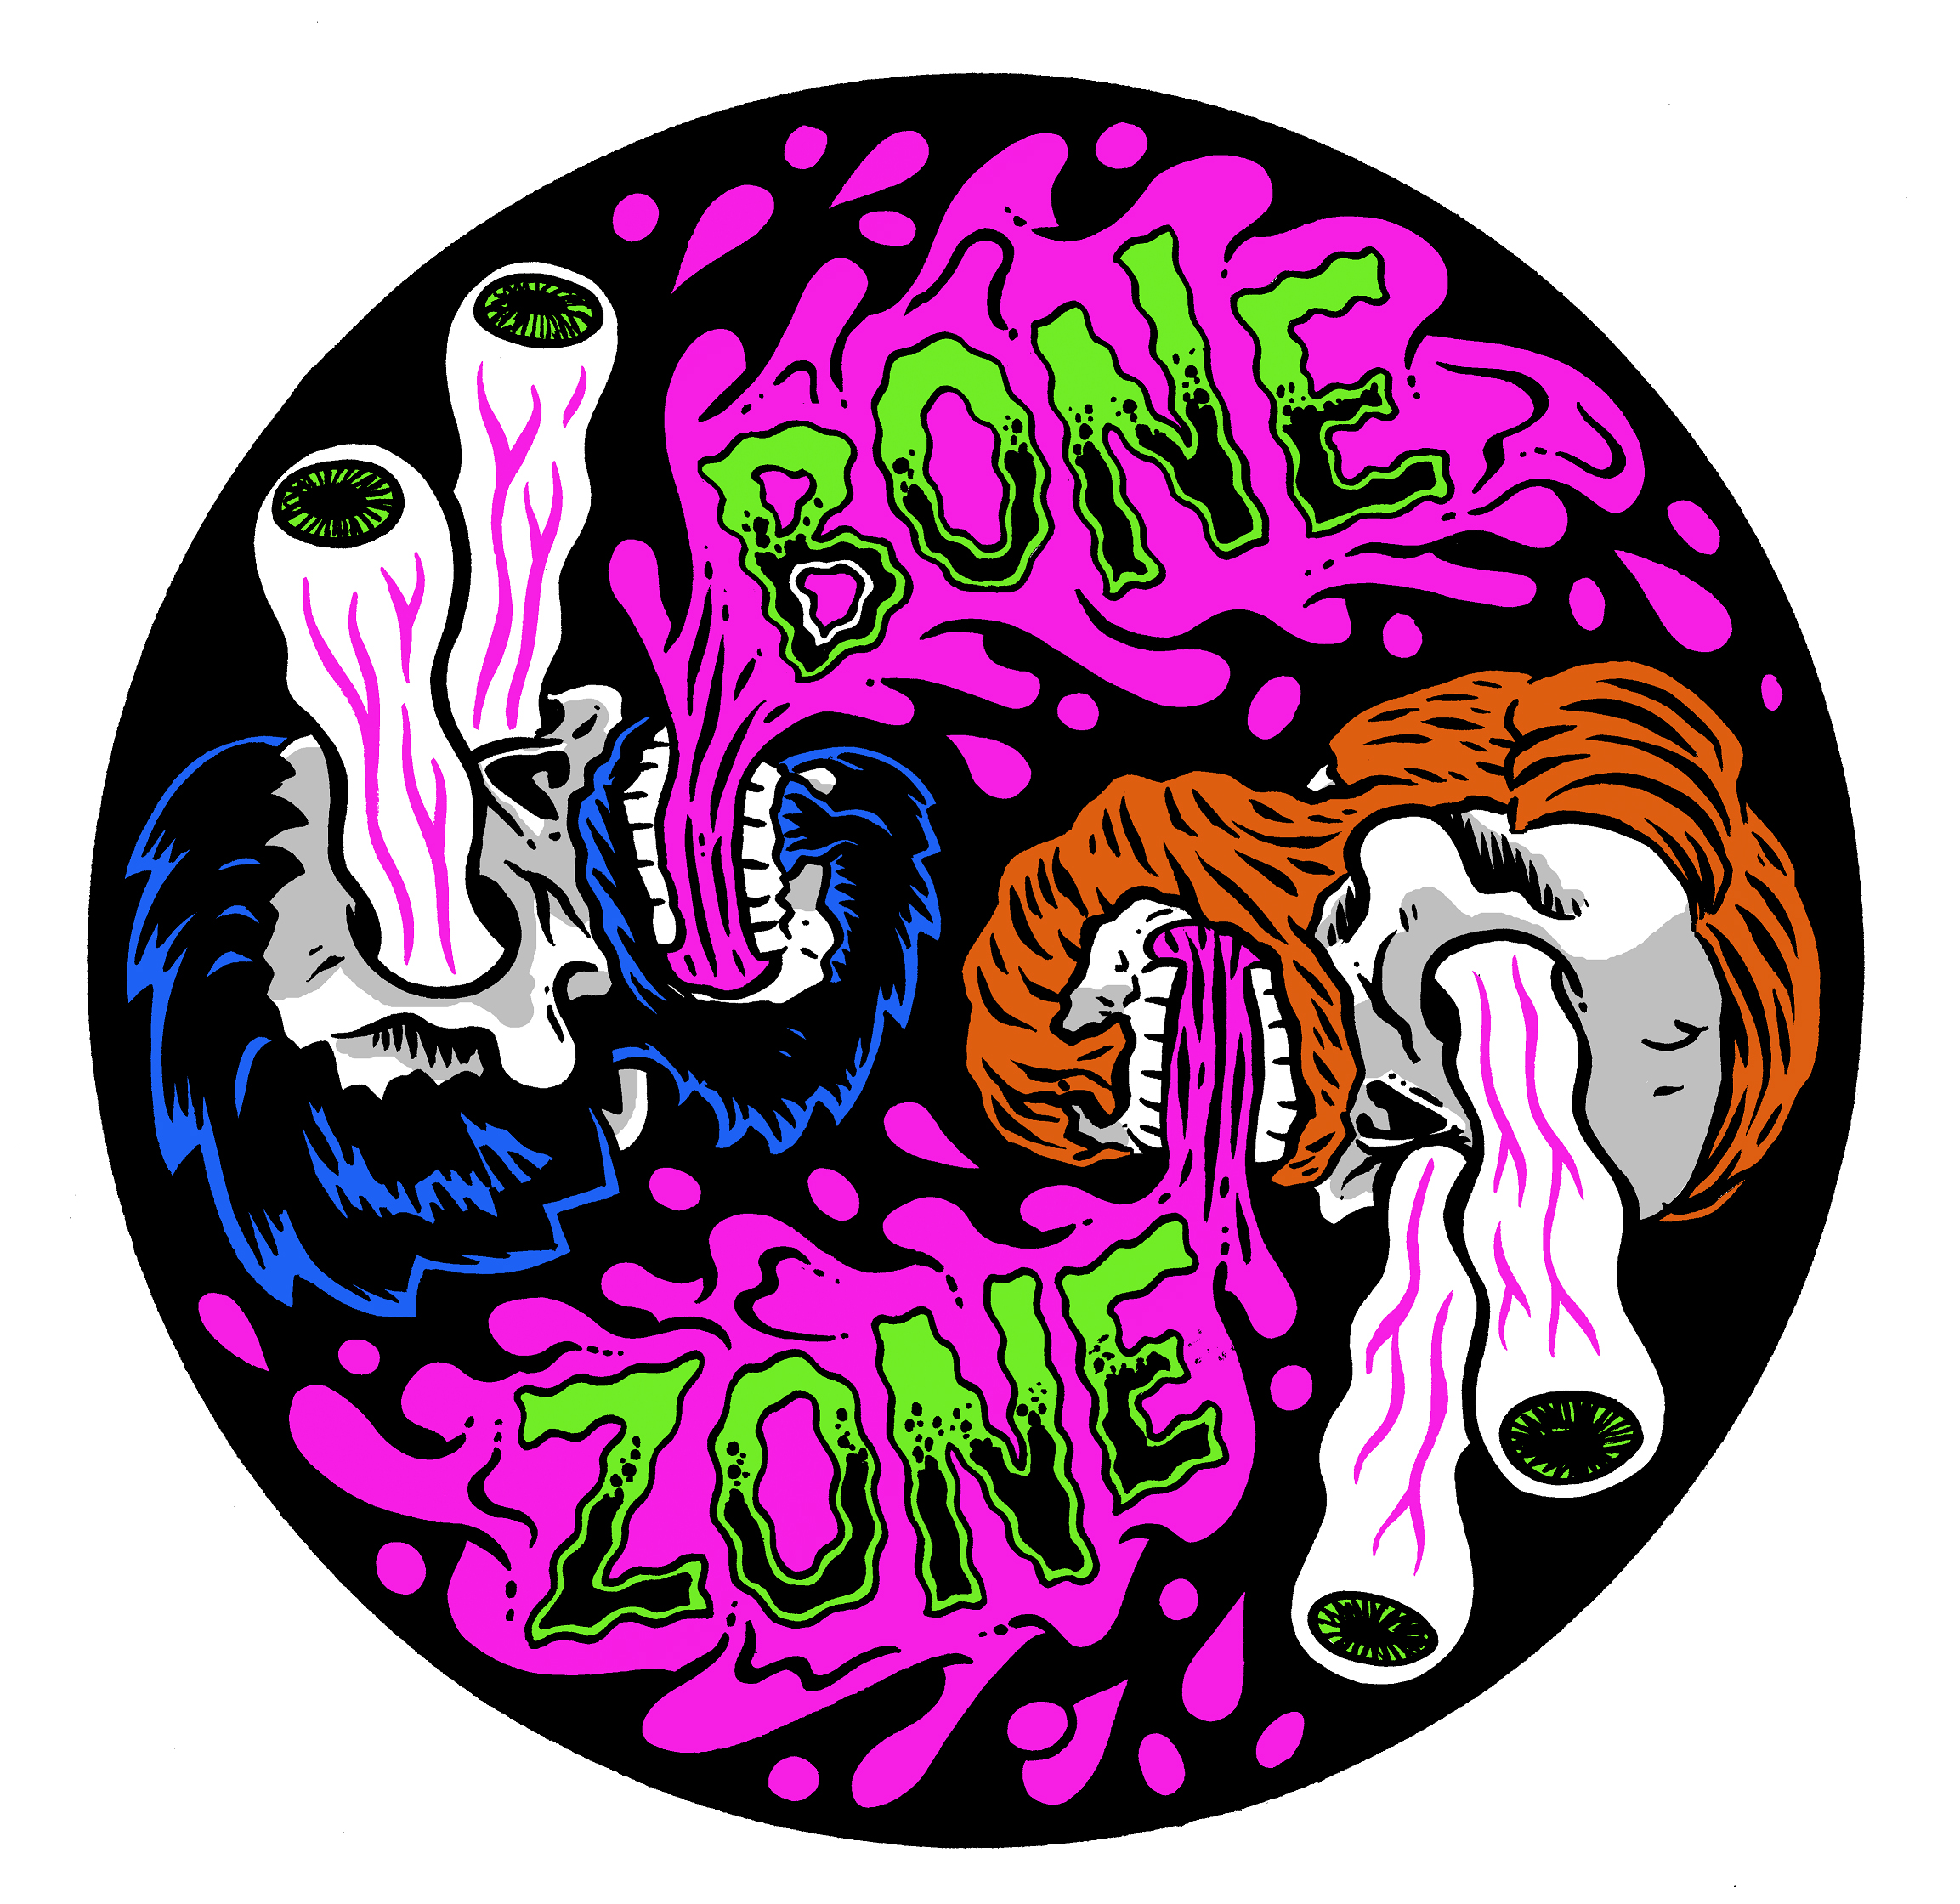 The Bone Zone